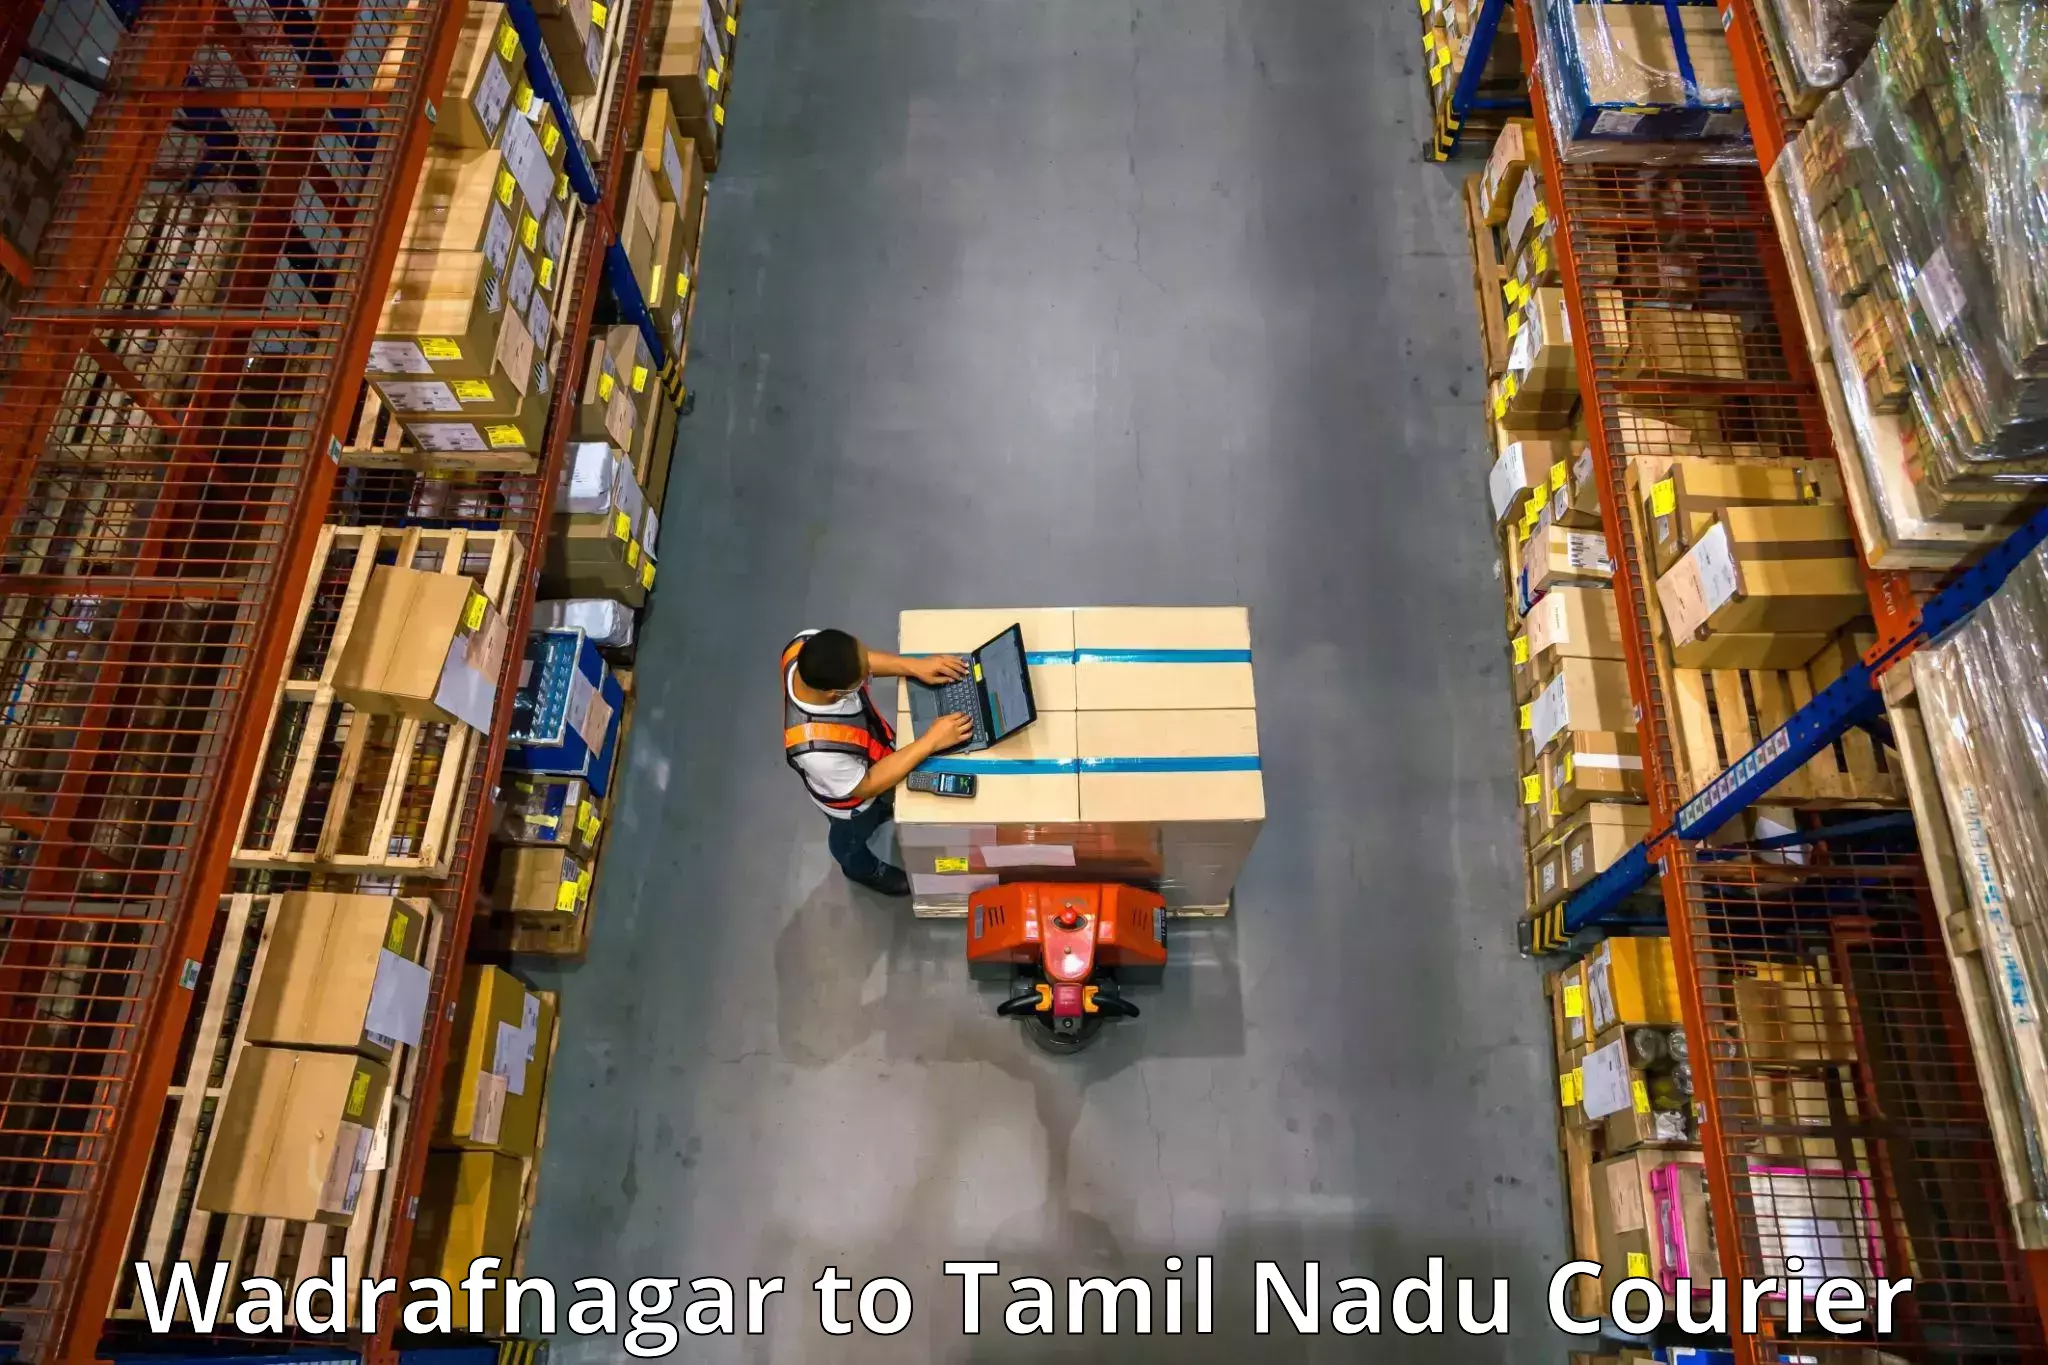 Furniture moving experts Wadrafnagar to Tiruvarur